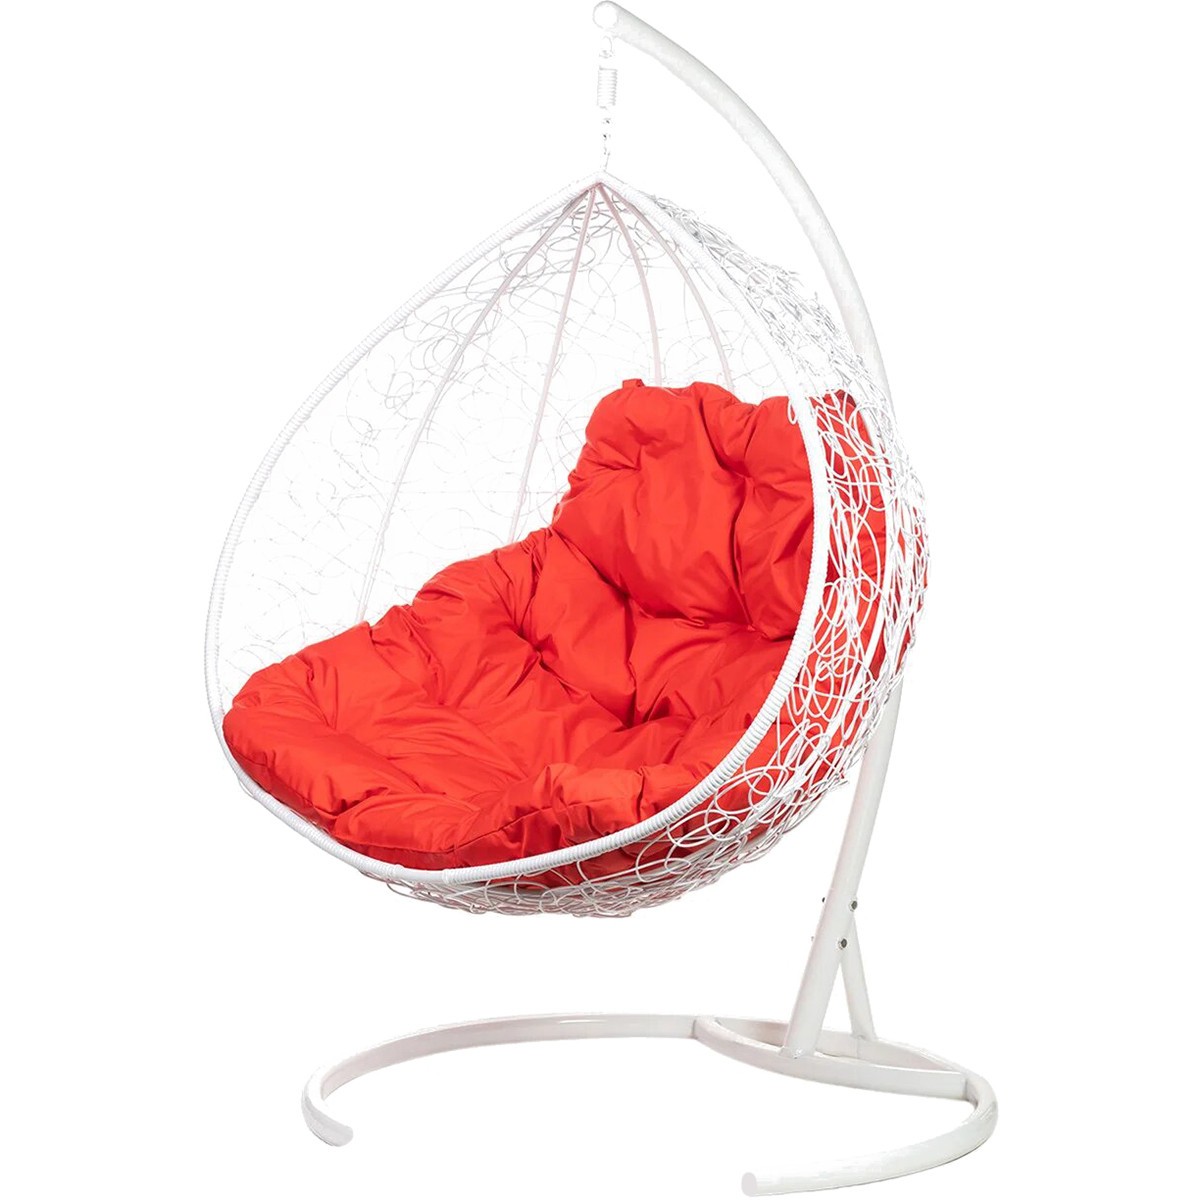 Двойное подвесное кресло "Gemini" promo white Красная подушка